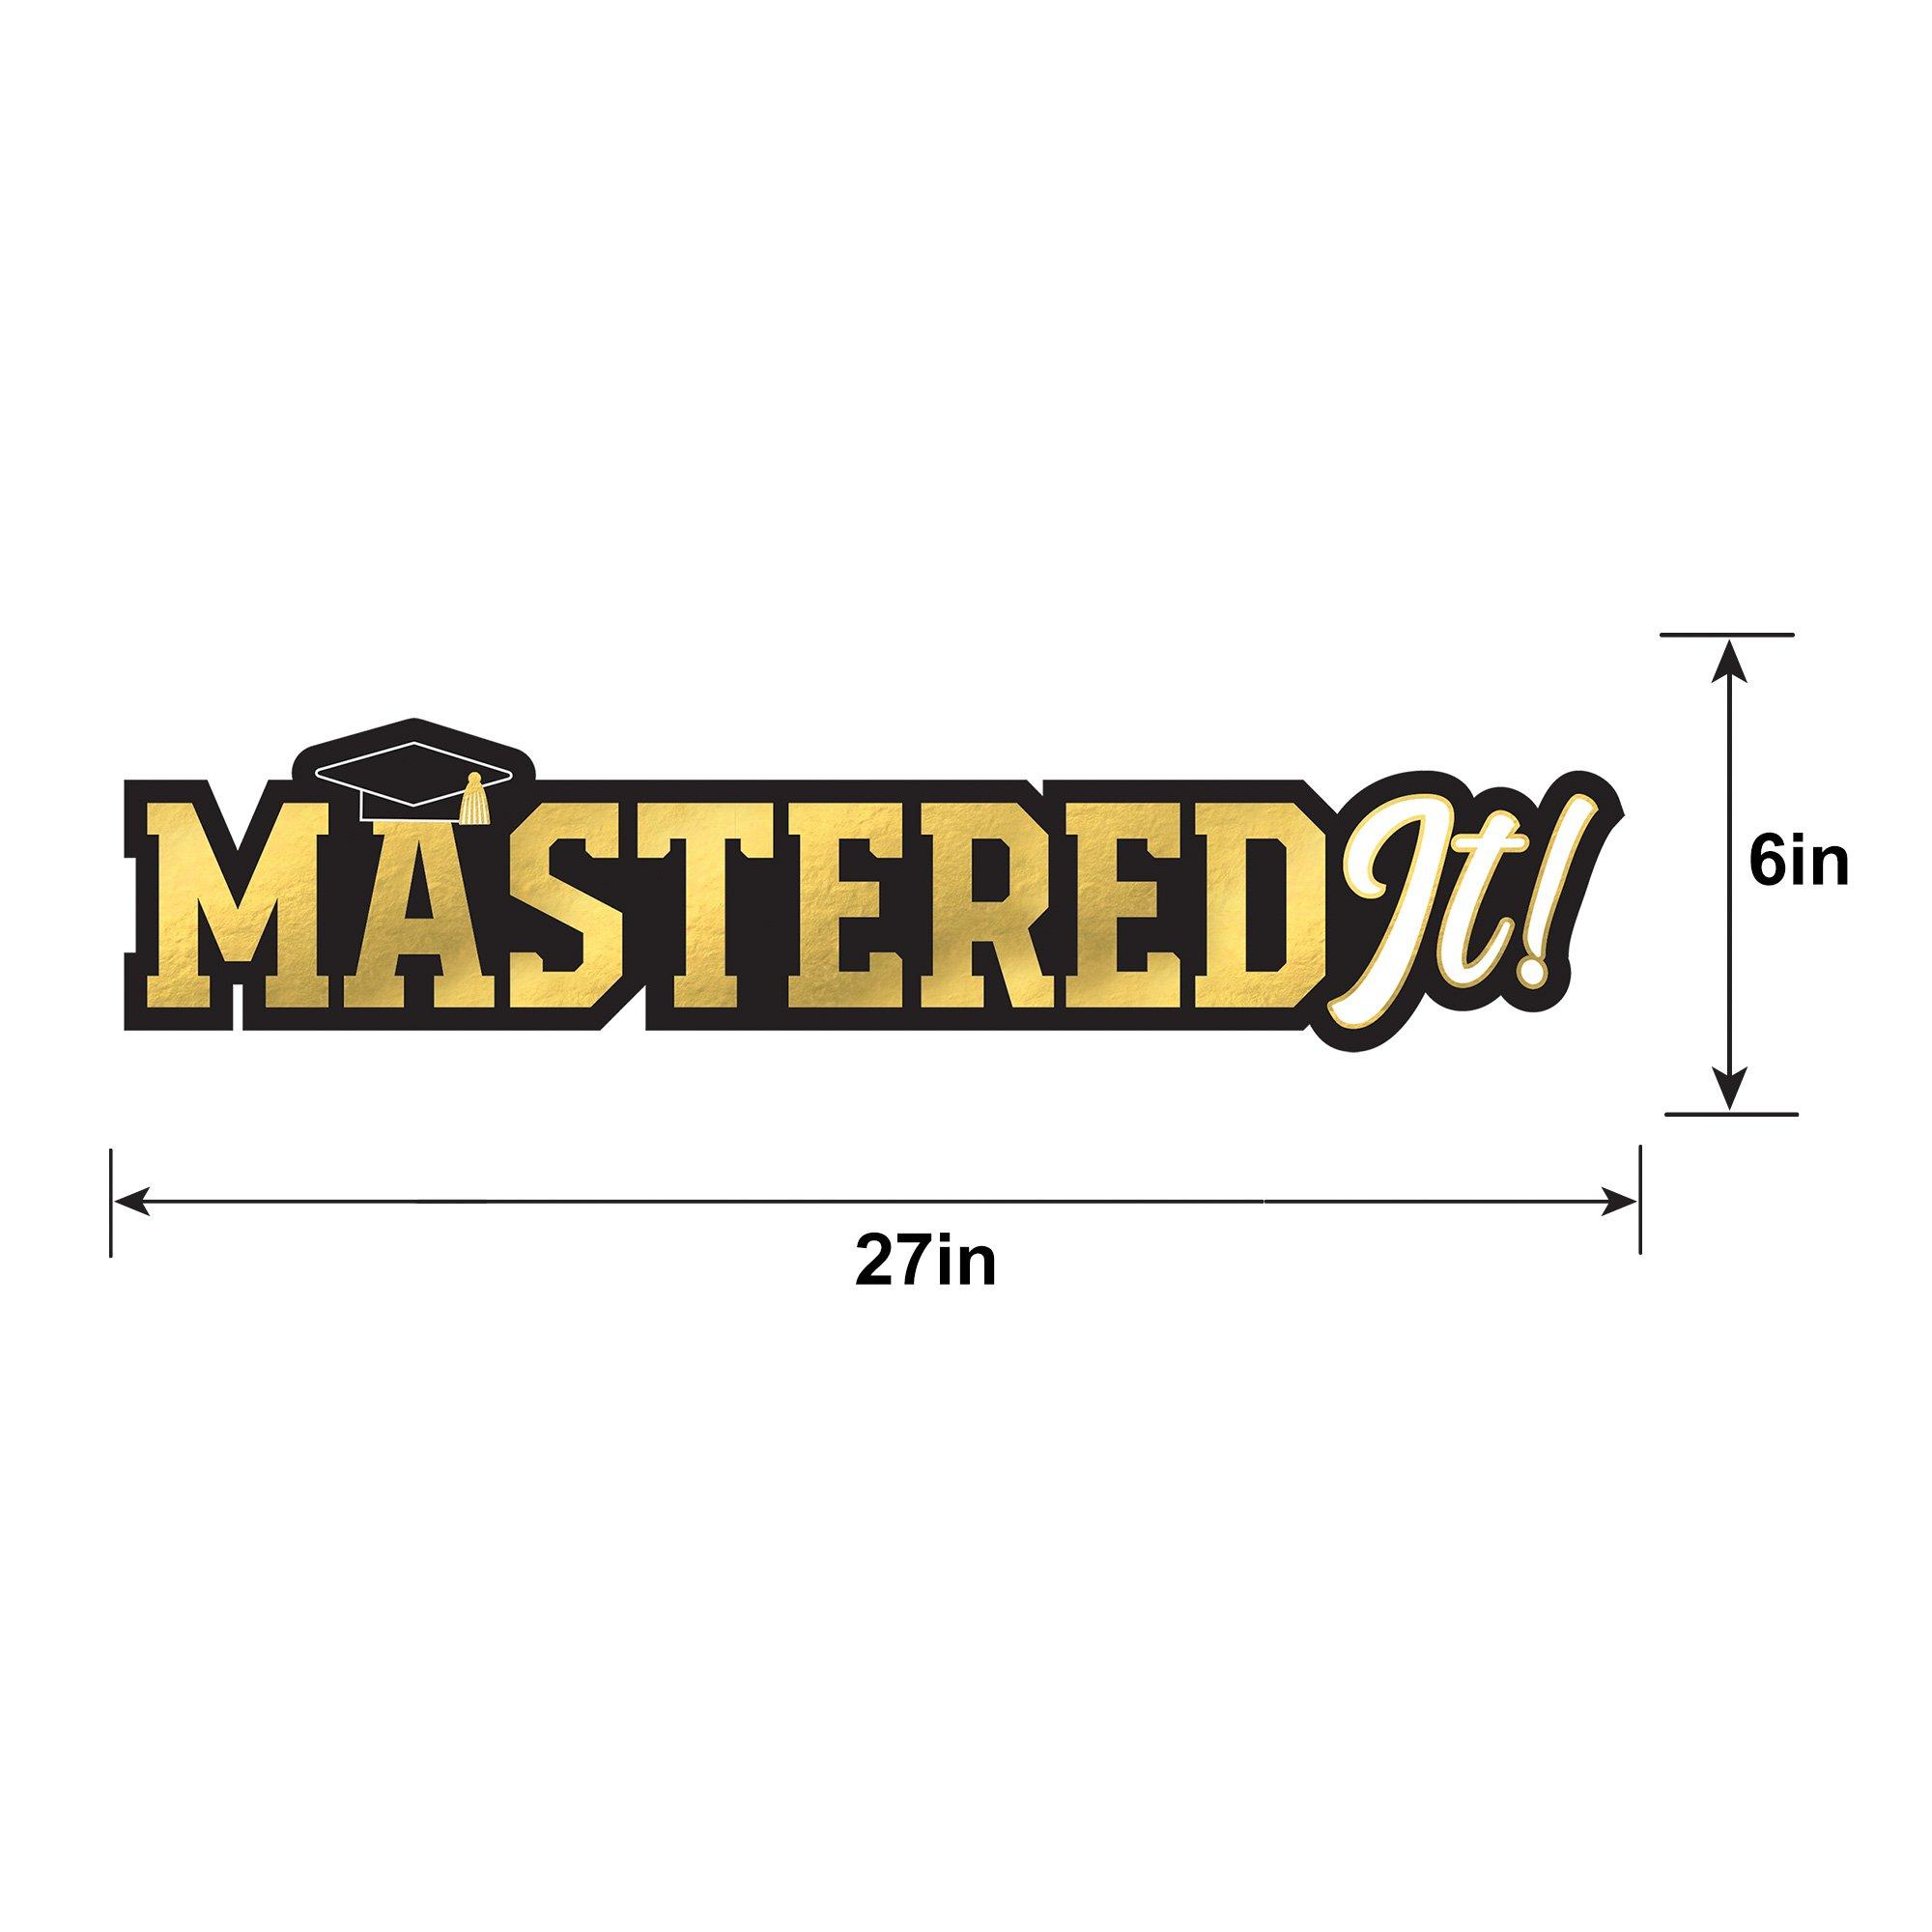 Metallic Mastered It Cardstock Cutout, 27in x 7in